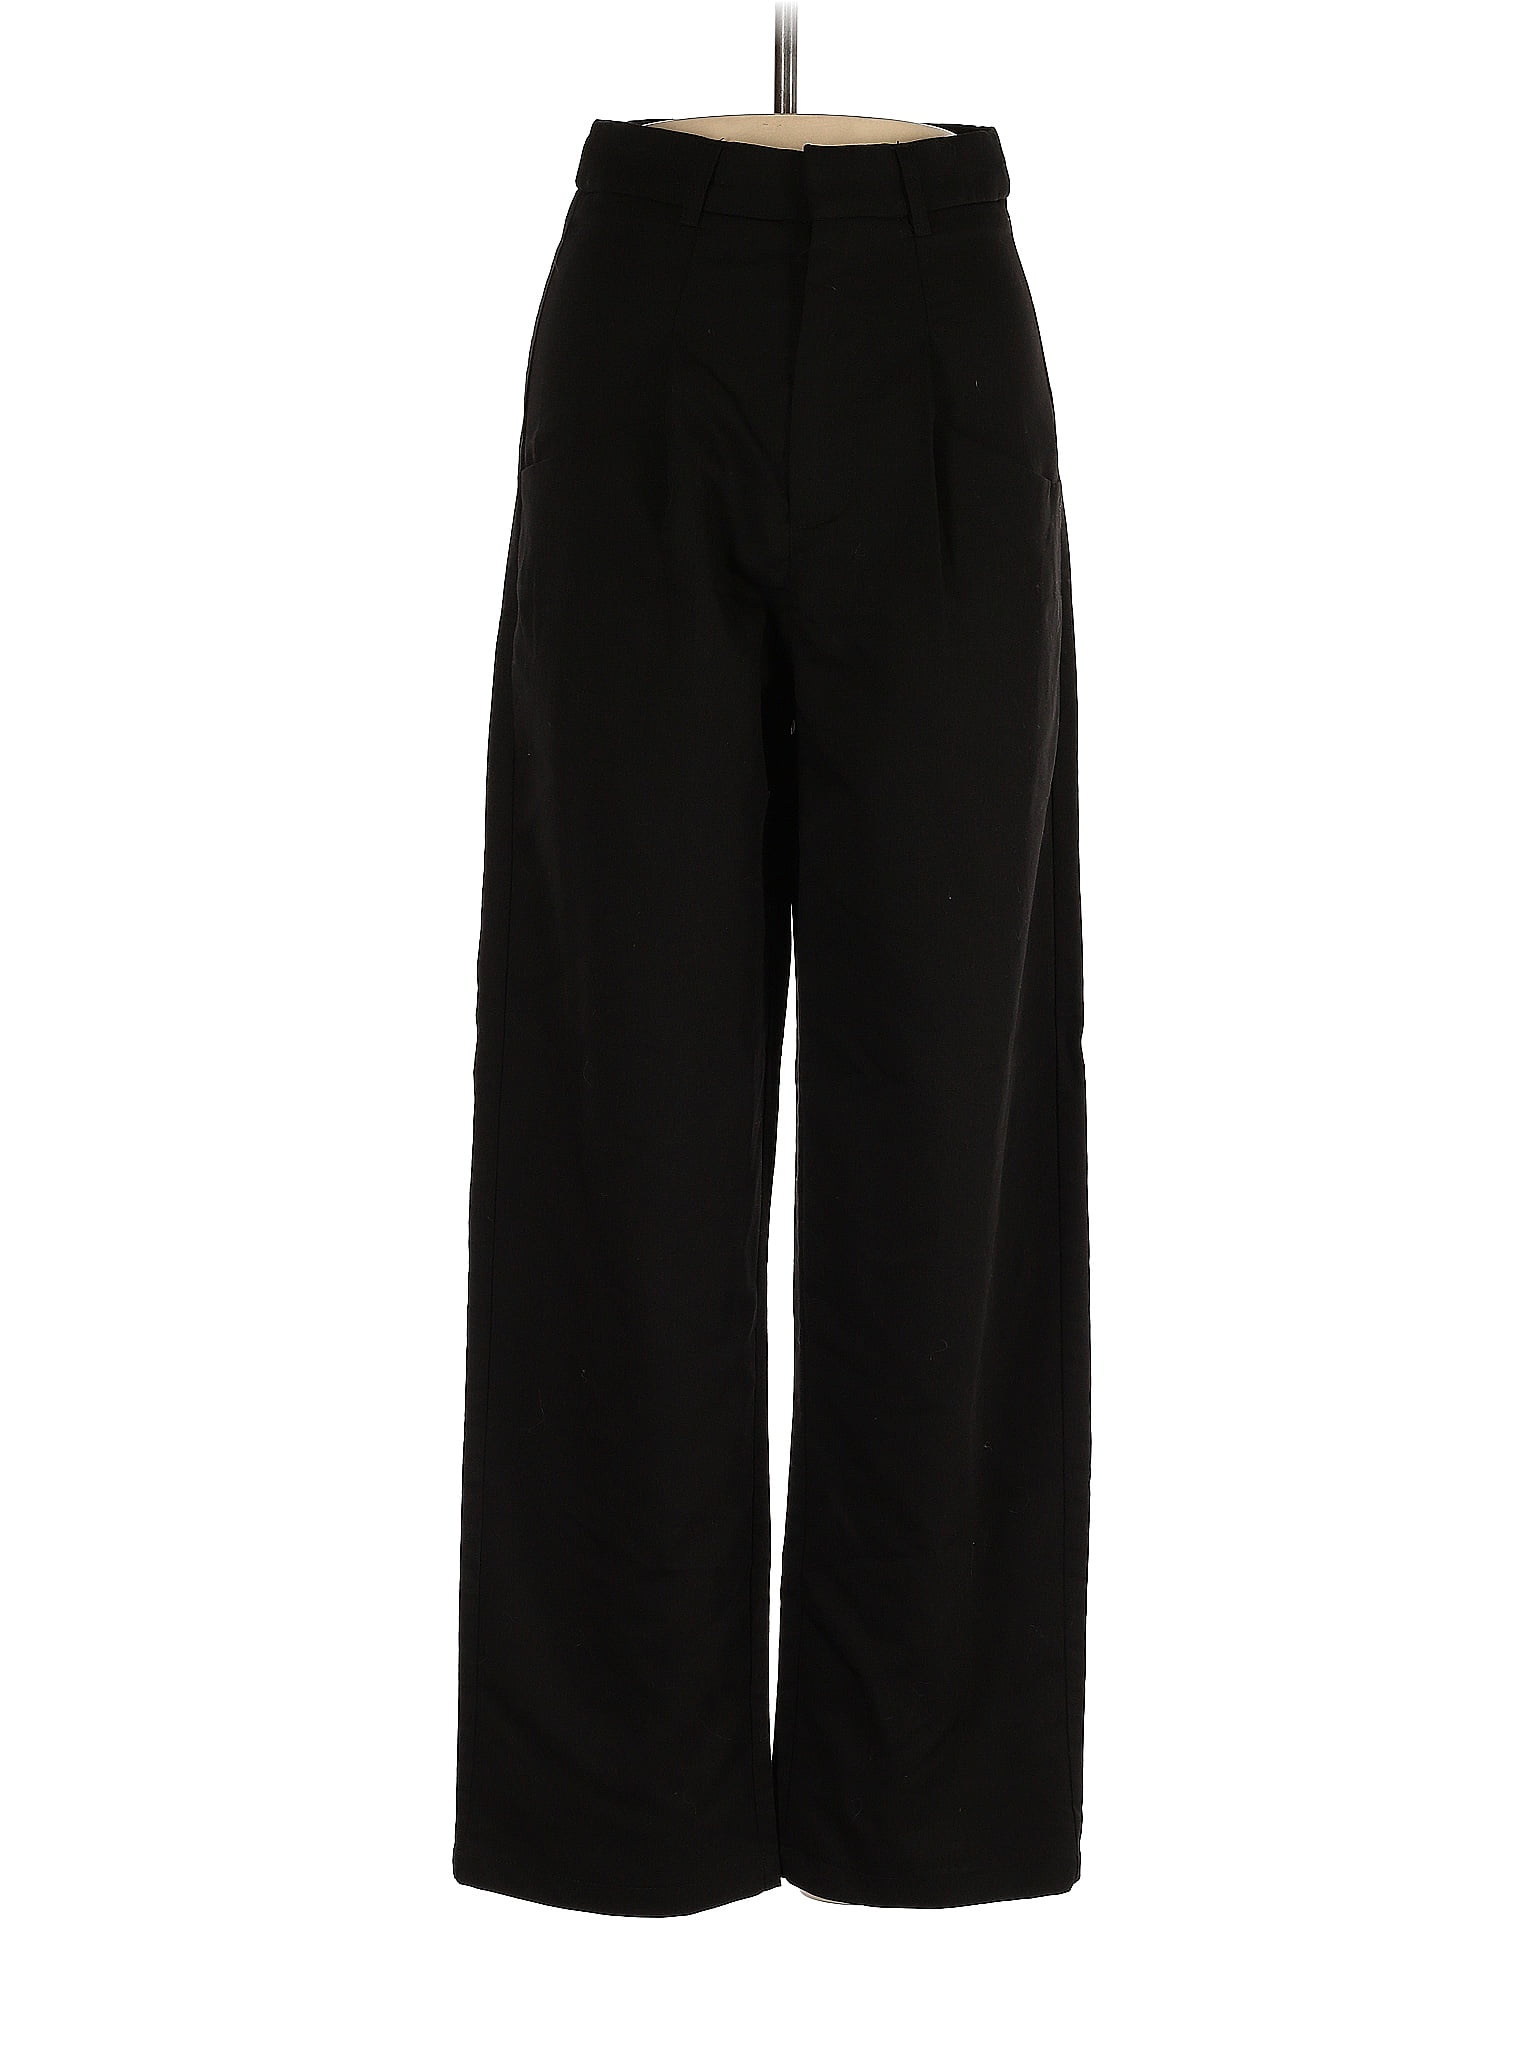 VNOOK Solid Black Dress Pants Size XS - 74% off | thredUP